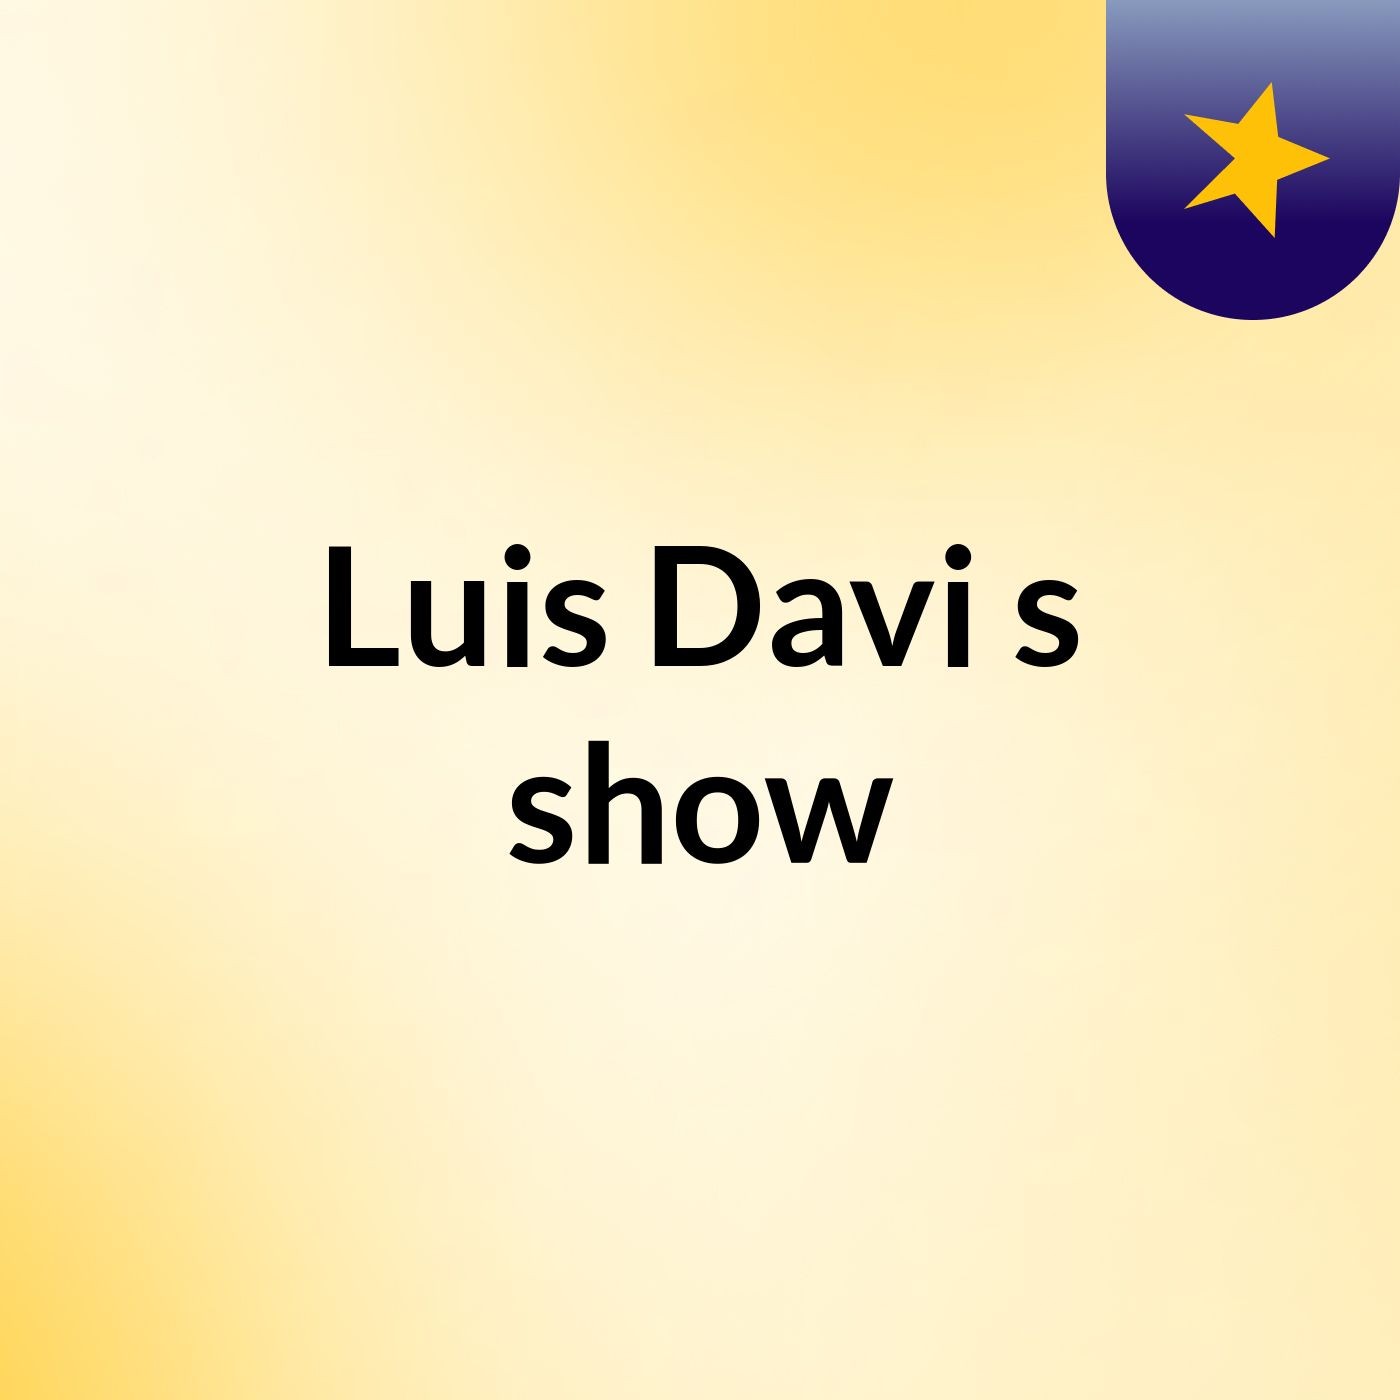 Luis Davi's show